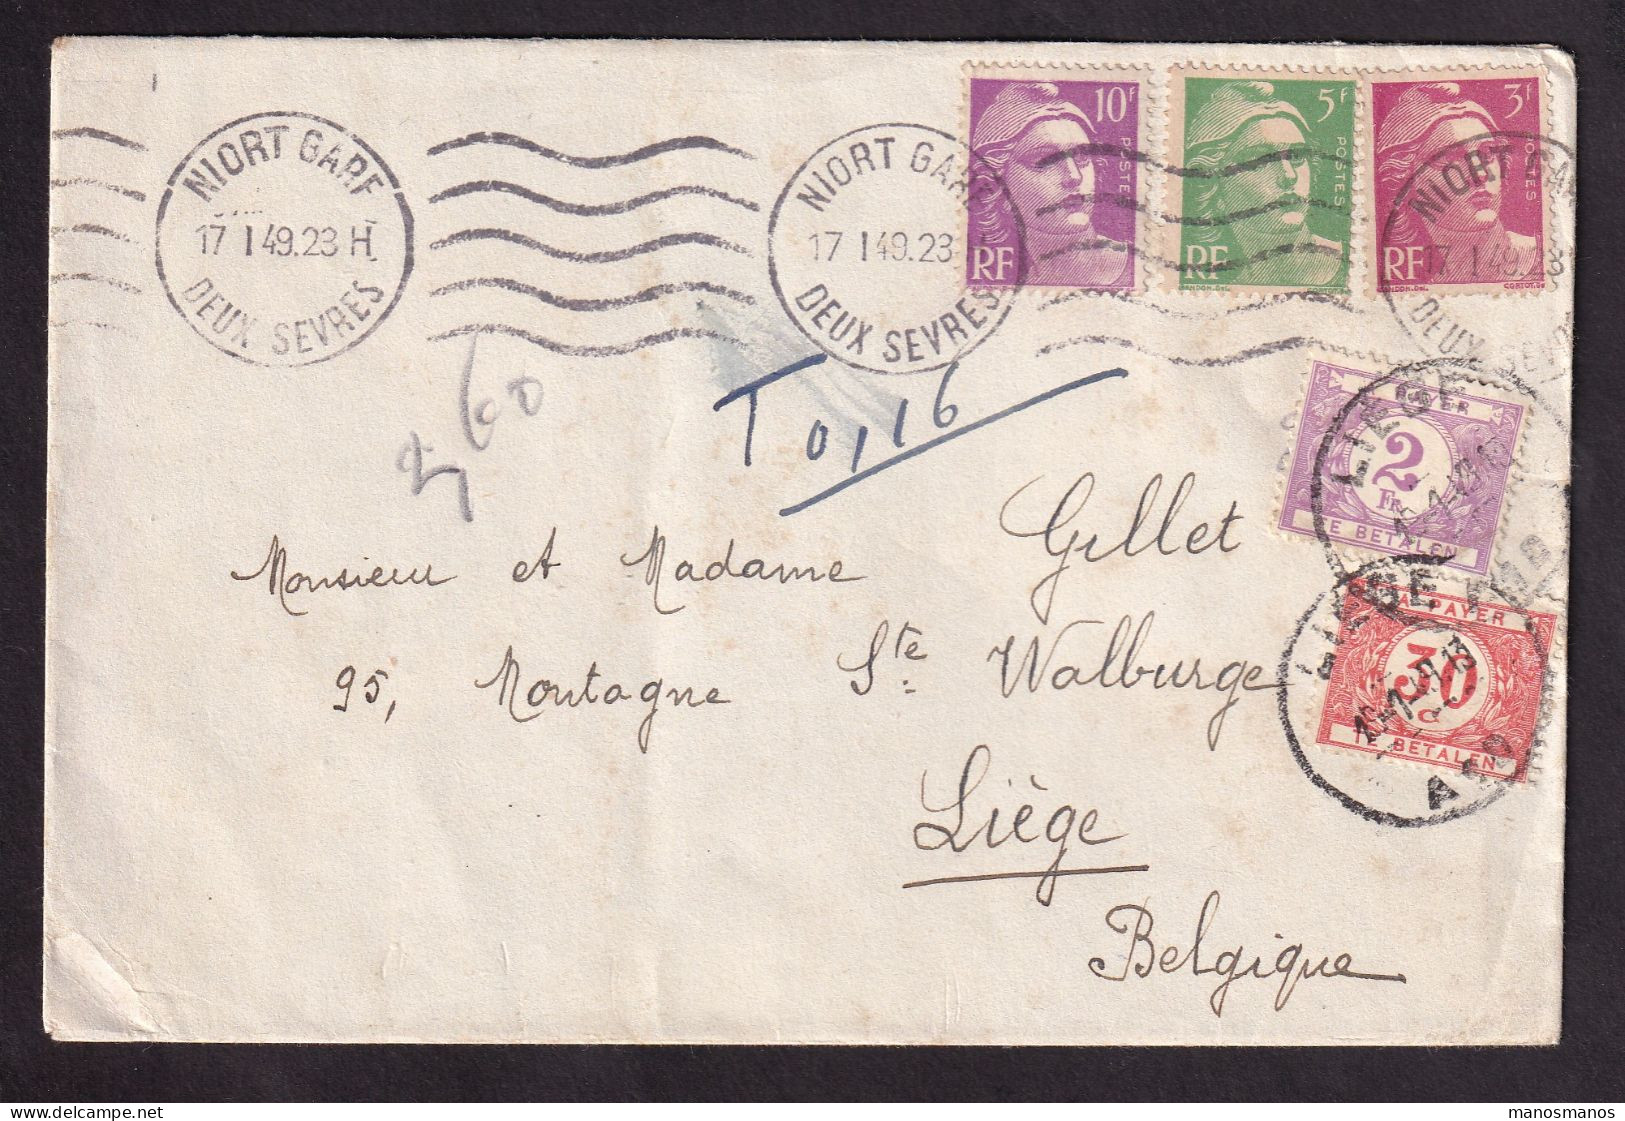 DDGG 047 - Enveloppe TP Marianne De Gandon NIORT 1949 -  Taxée 2 F 30 à LIEGE Belgique - Man. T 0,16 - 1945-54 Marianne (Gandon)